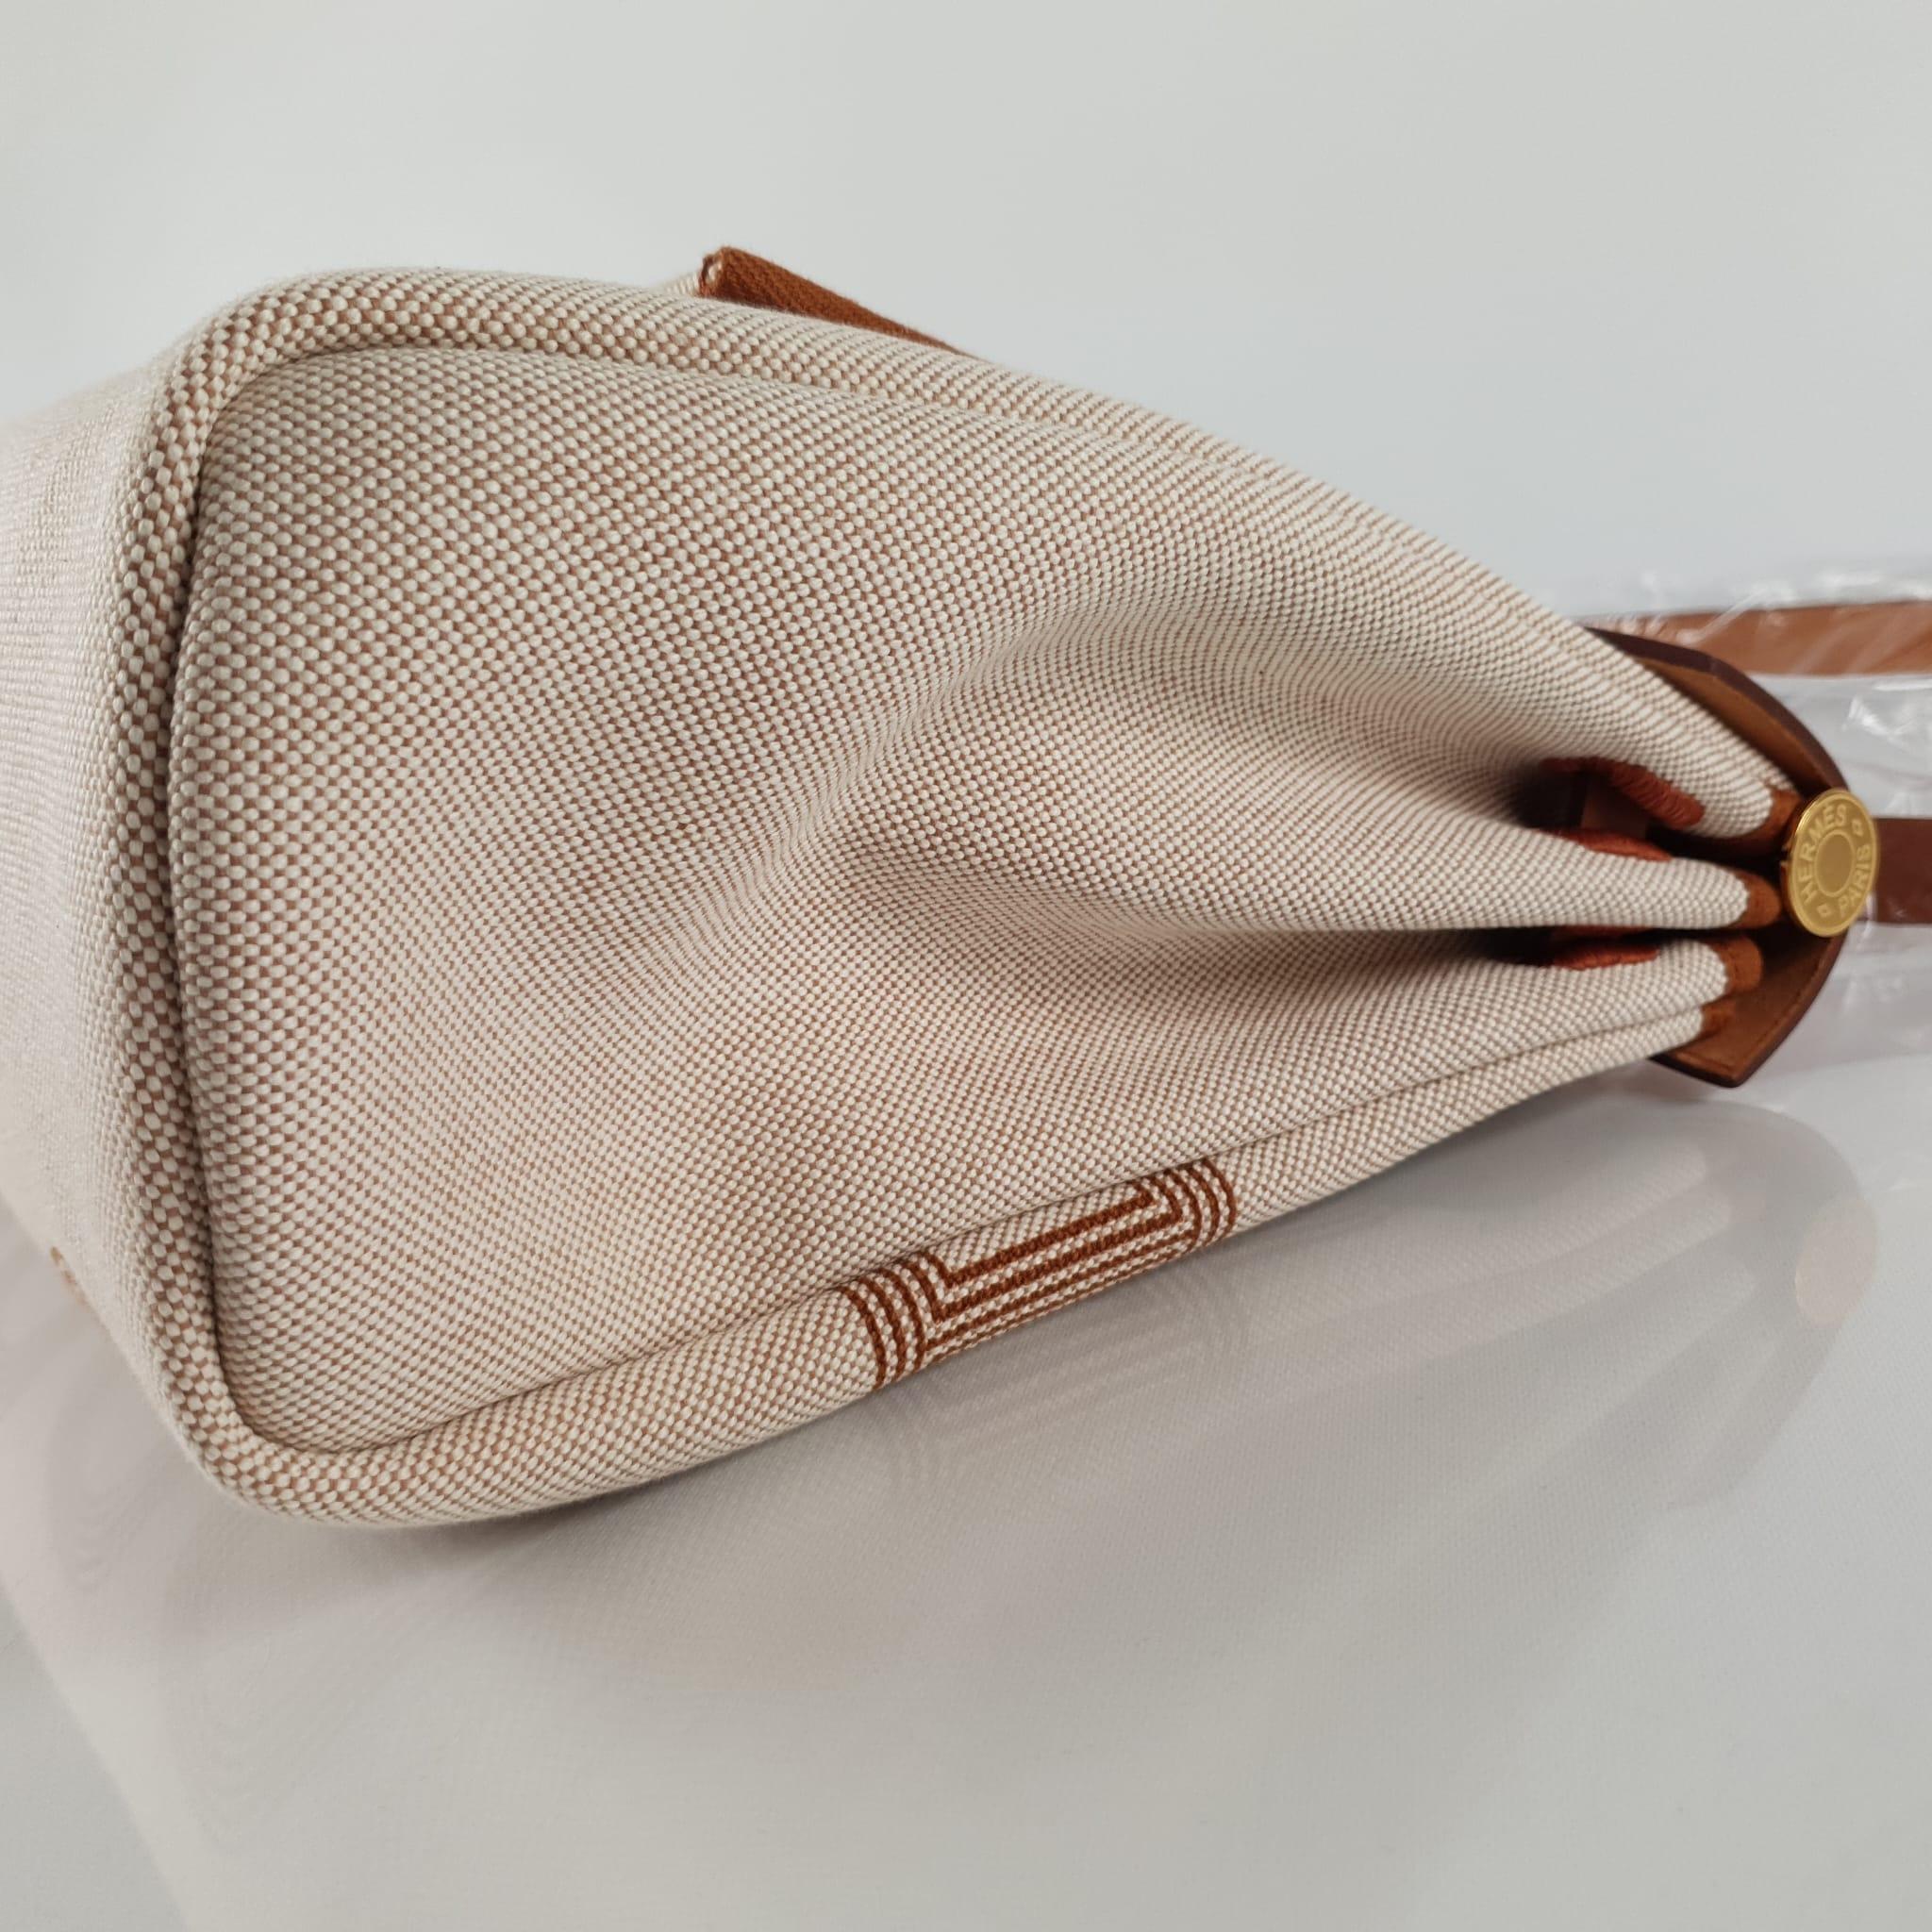 Herbag 31 Zip handbag Fauve, ecru & beige Toile H Plume  2024 Brand New in Box 2